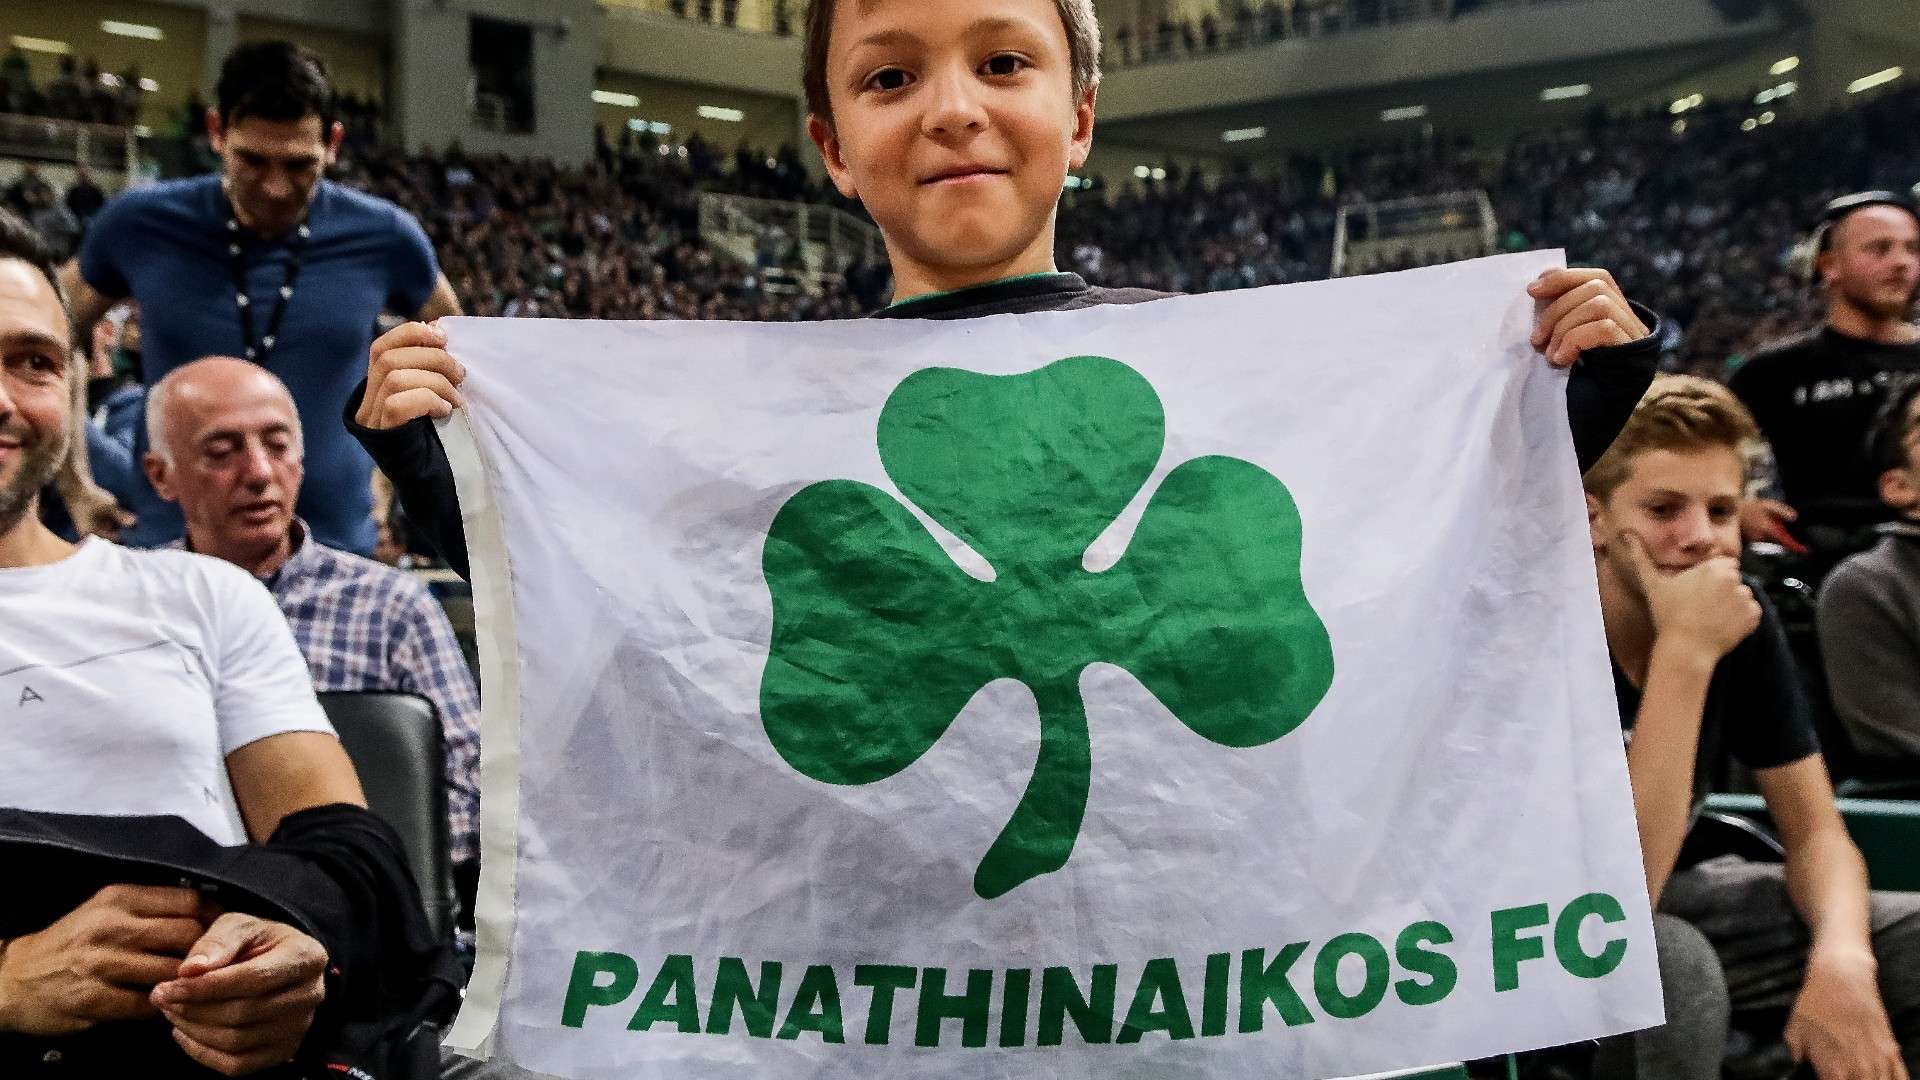 Panathinaikos fan